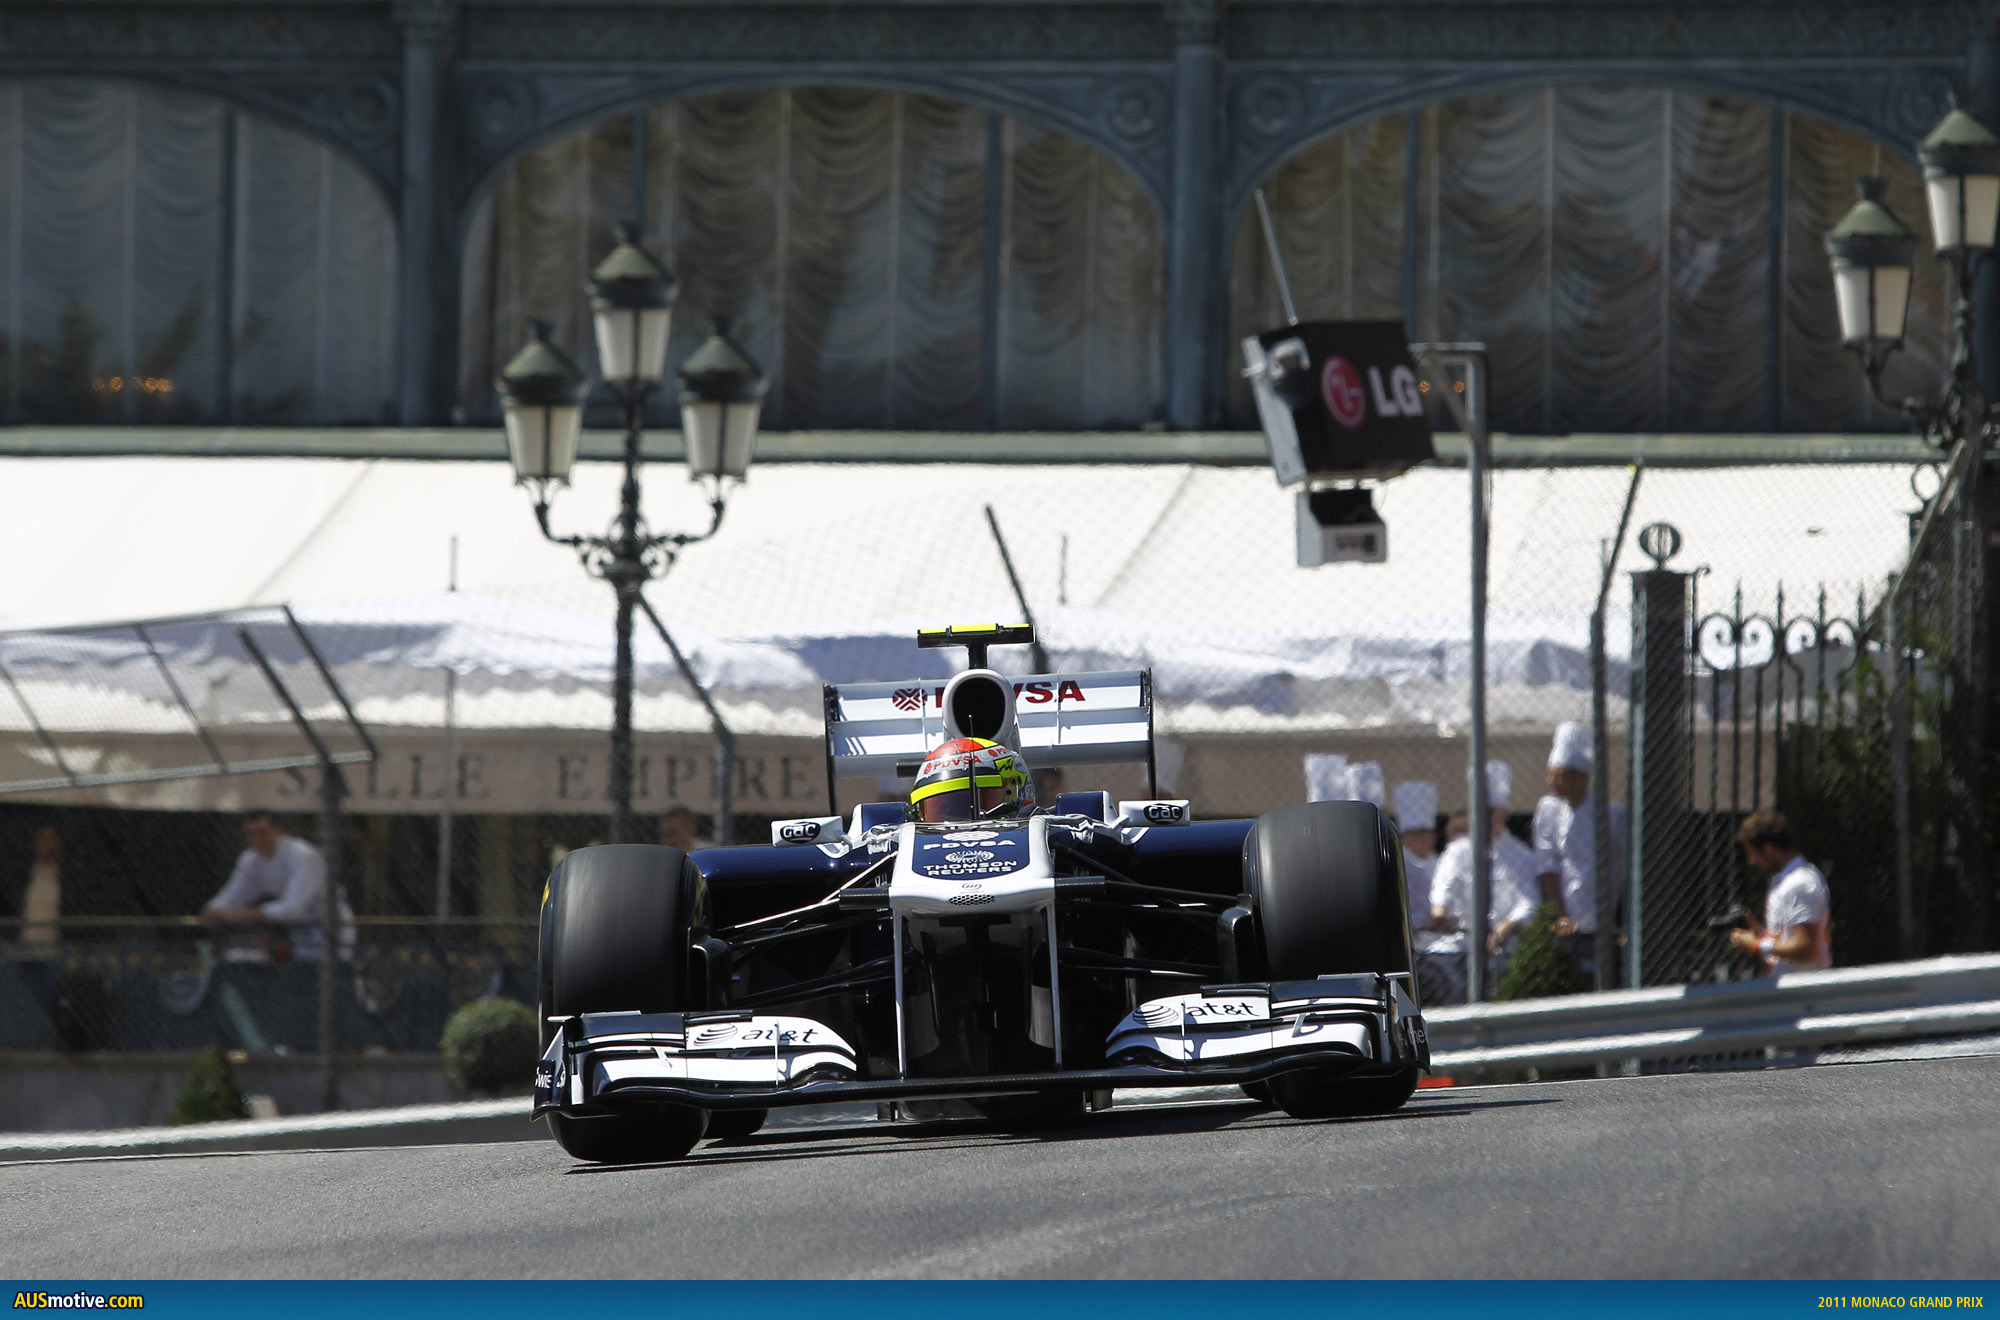 AUSmotive.com » 2011 Monaco Grand Prix in pictures